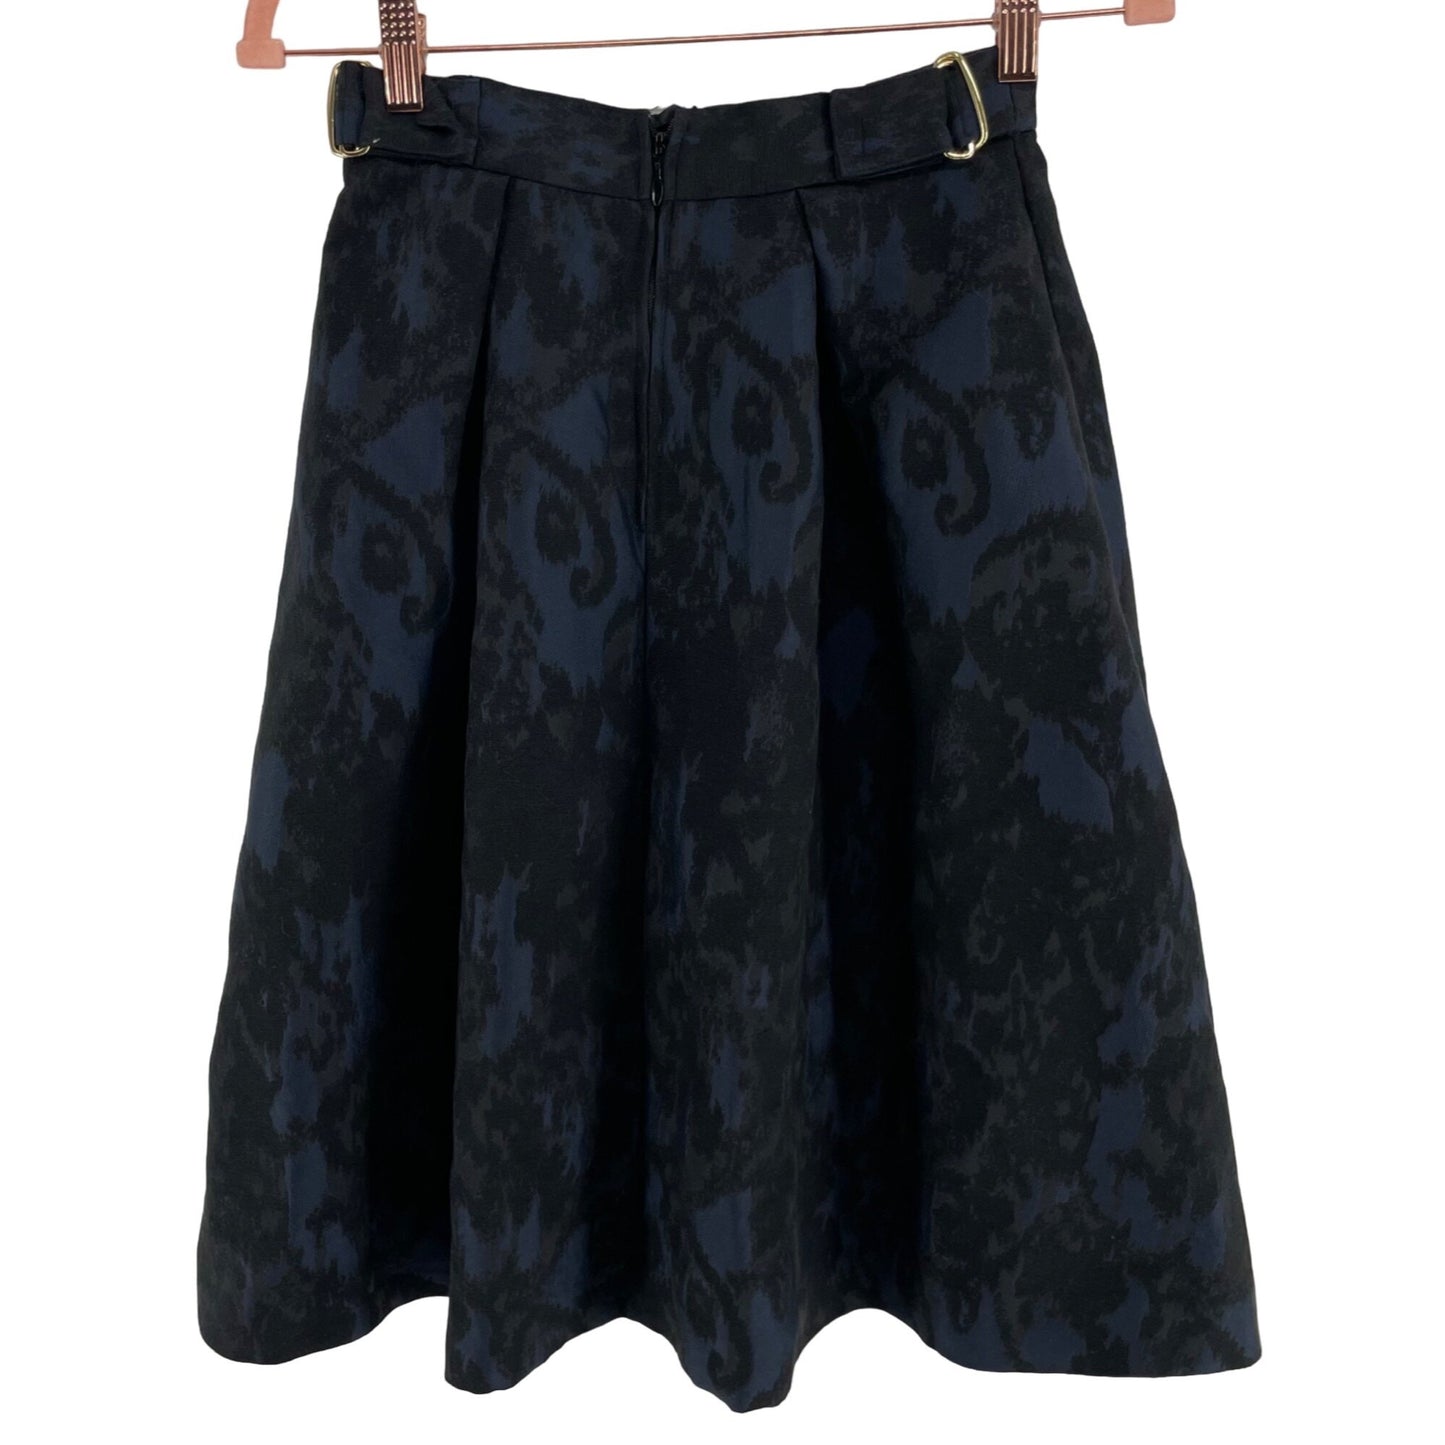 H&M Women's Size 4 Black & Navy Pleated A-Line Formal Midi Skirt